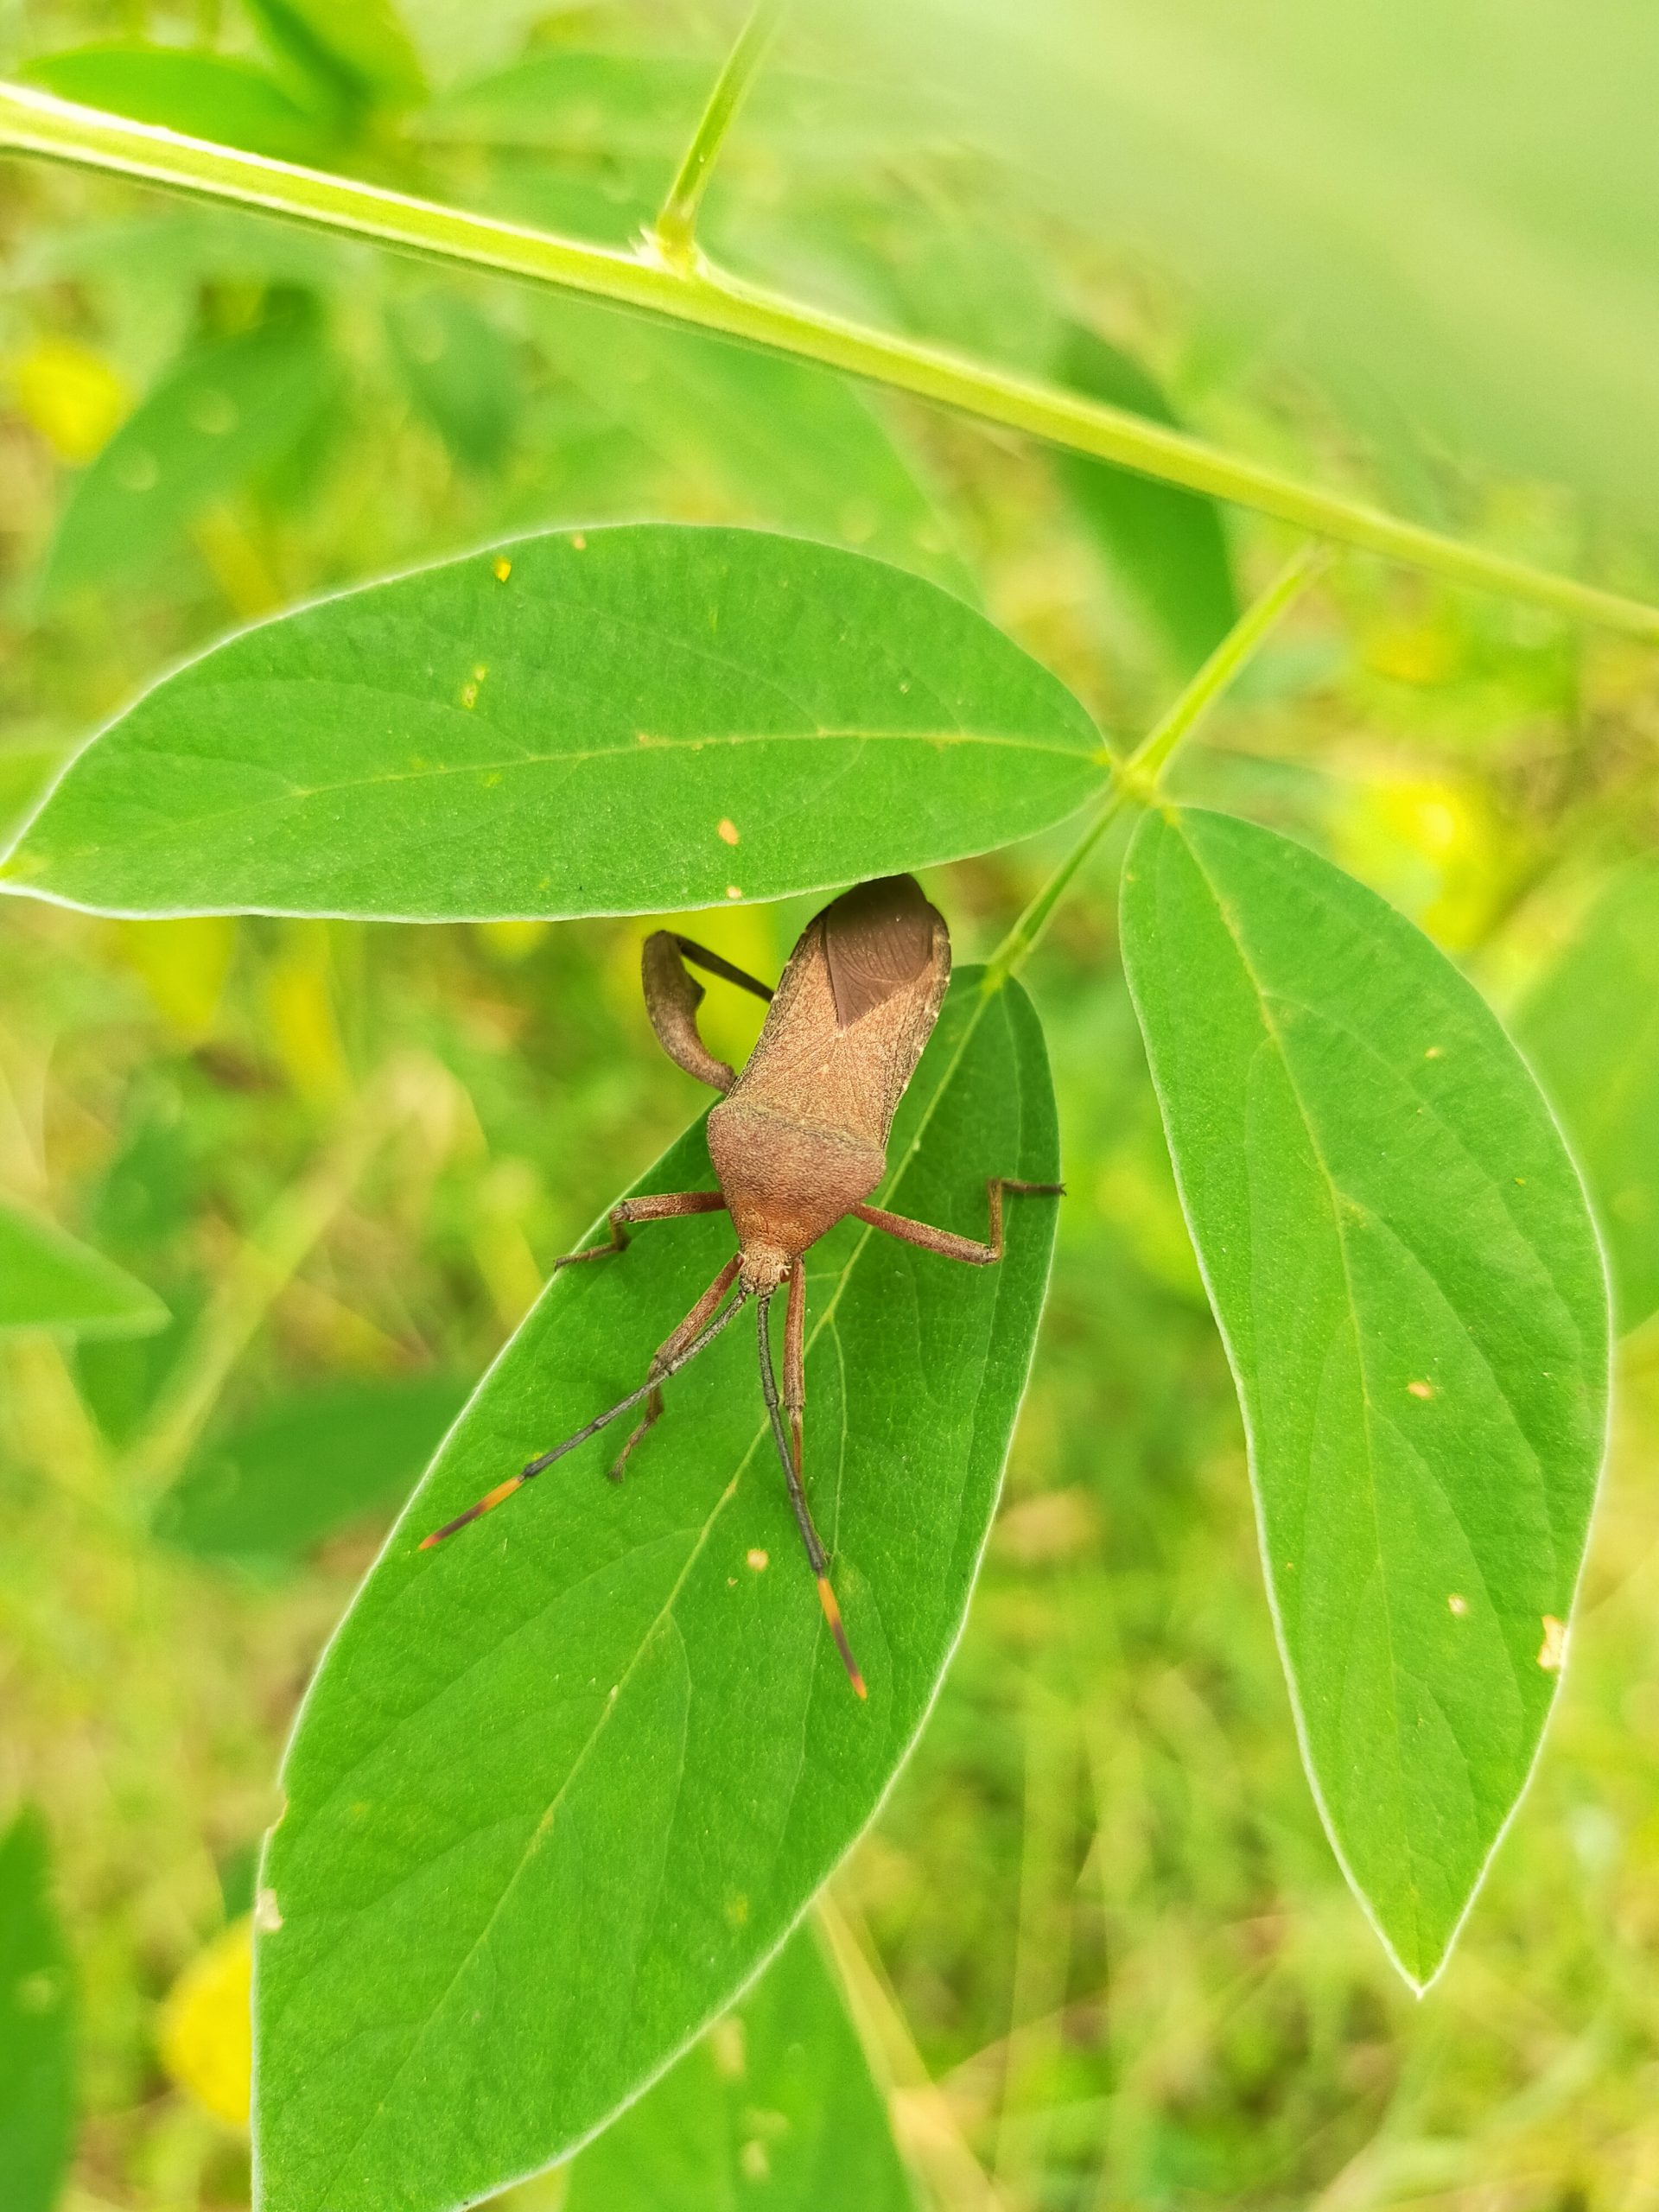 A bug on leaf